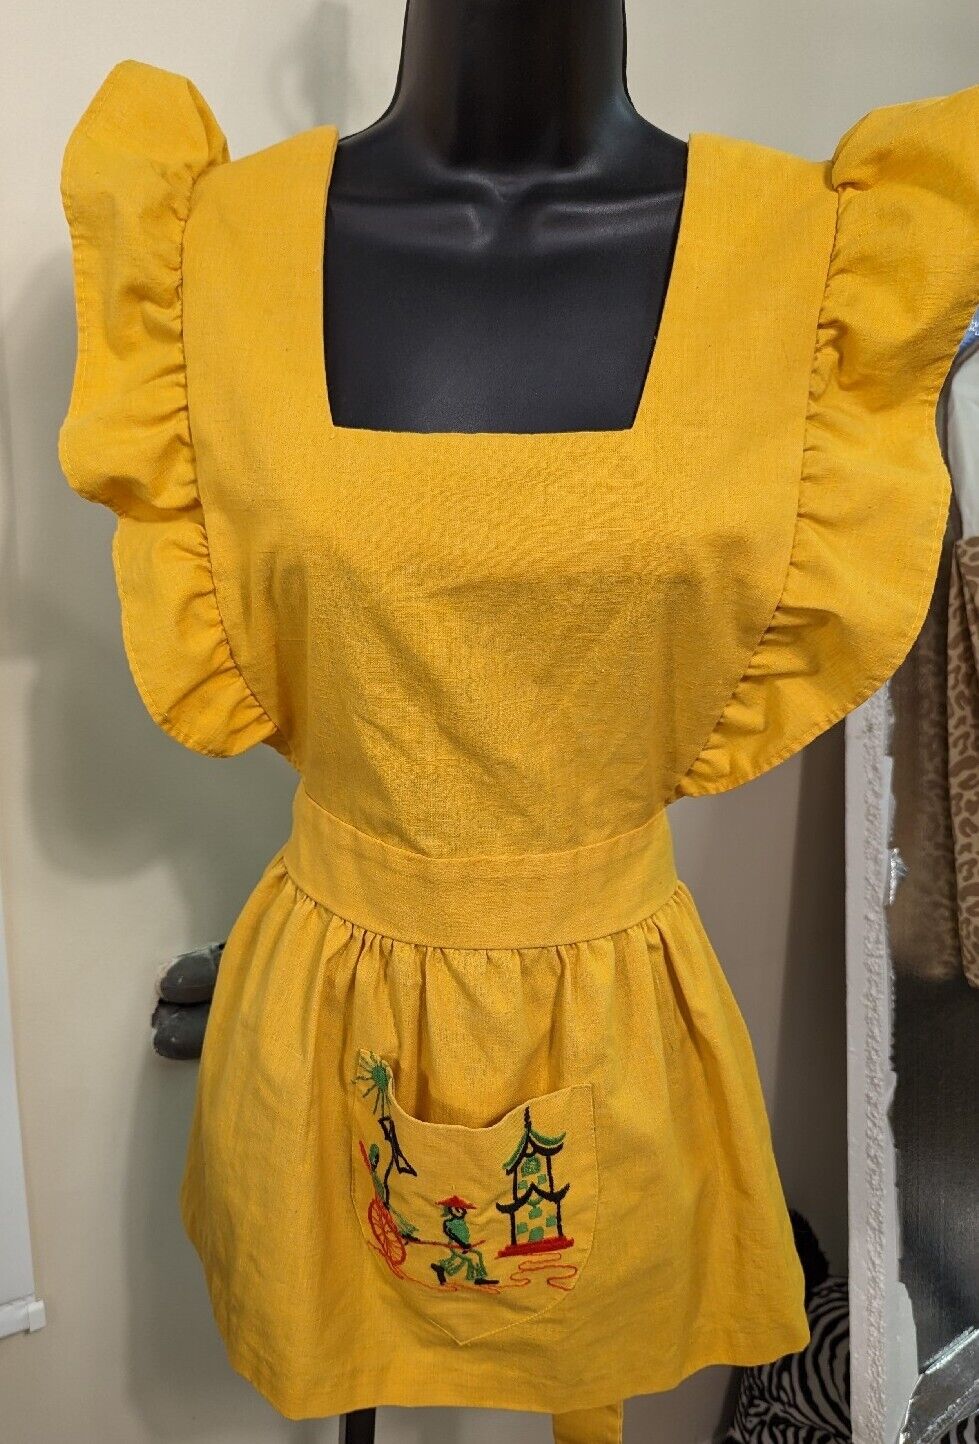 Vintage Bib Apron Handmade c1940s Heavy Cotton Linen Embroidered Rickshaw Yellow